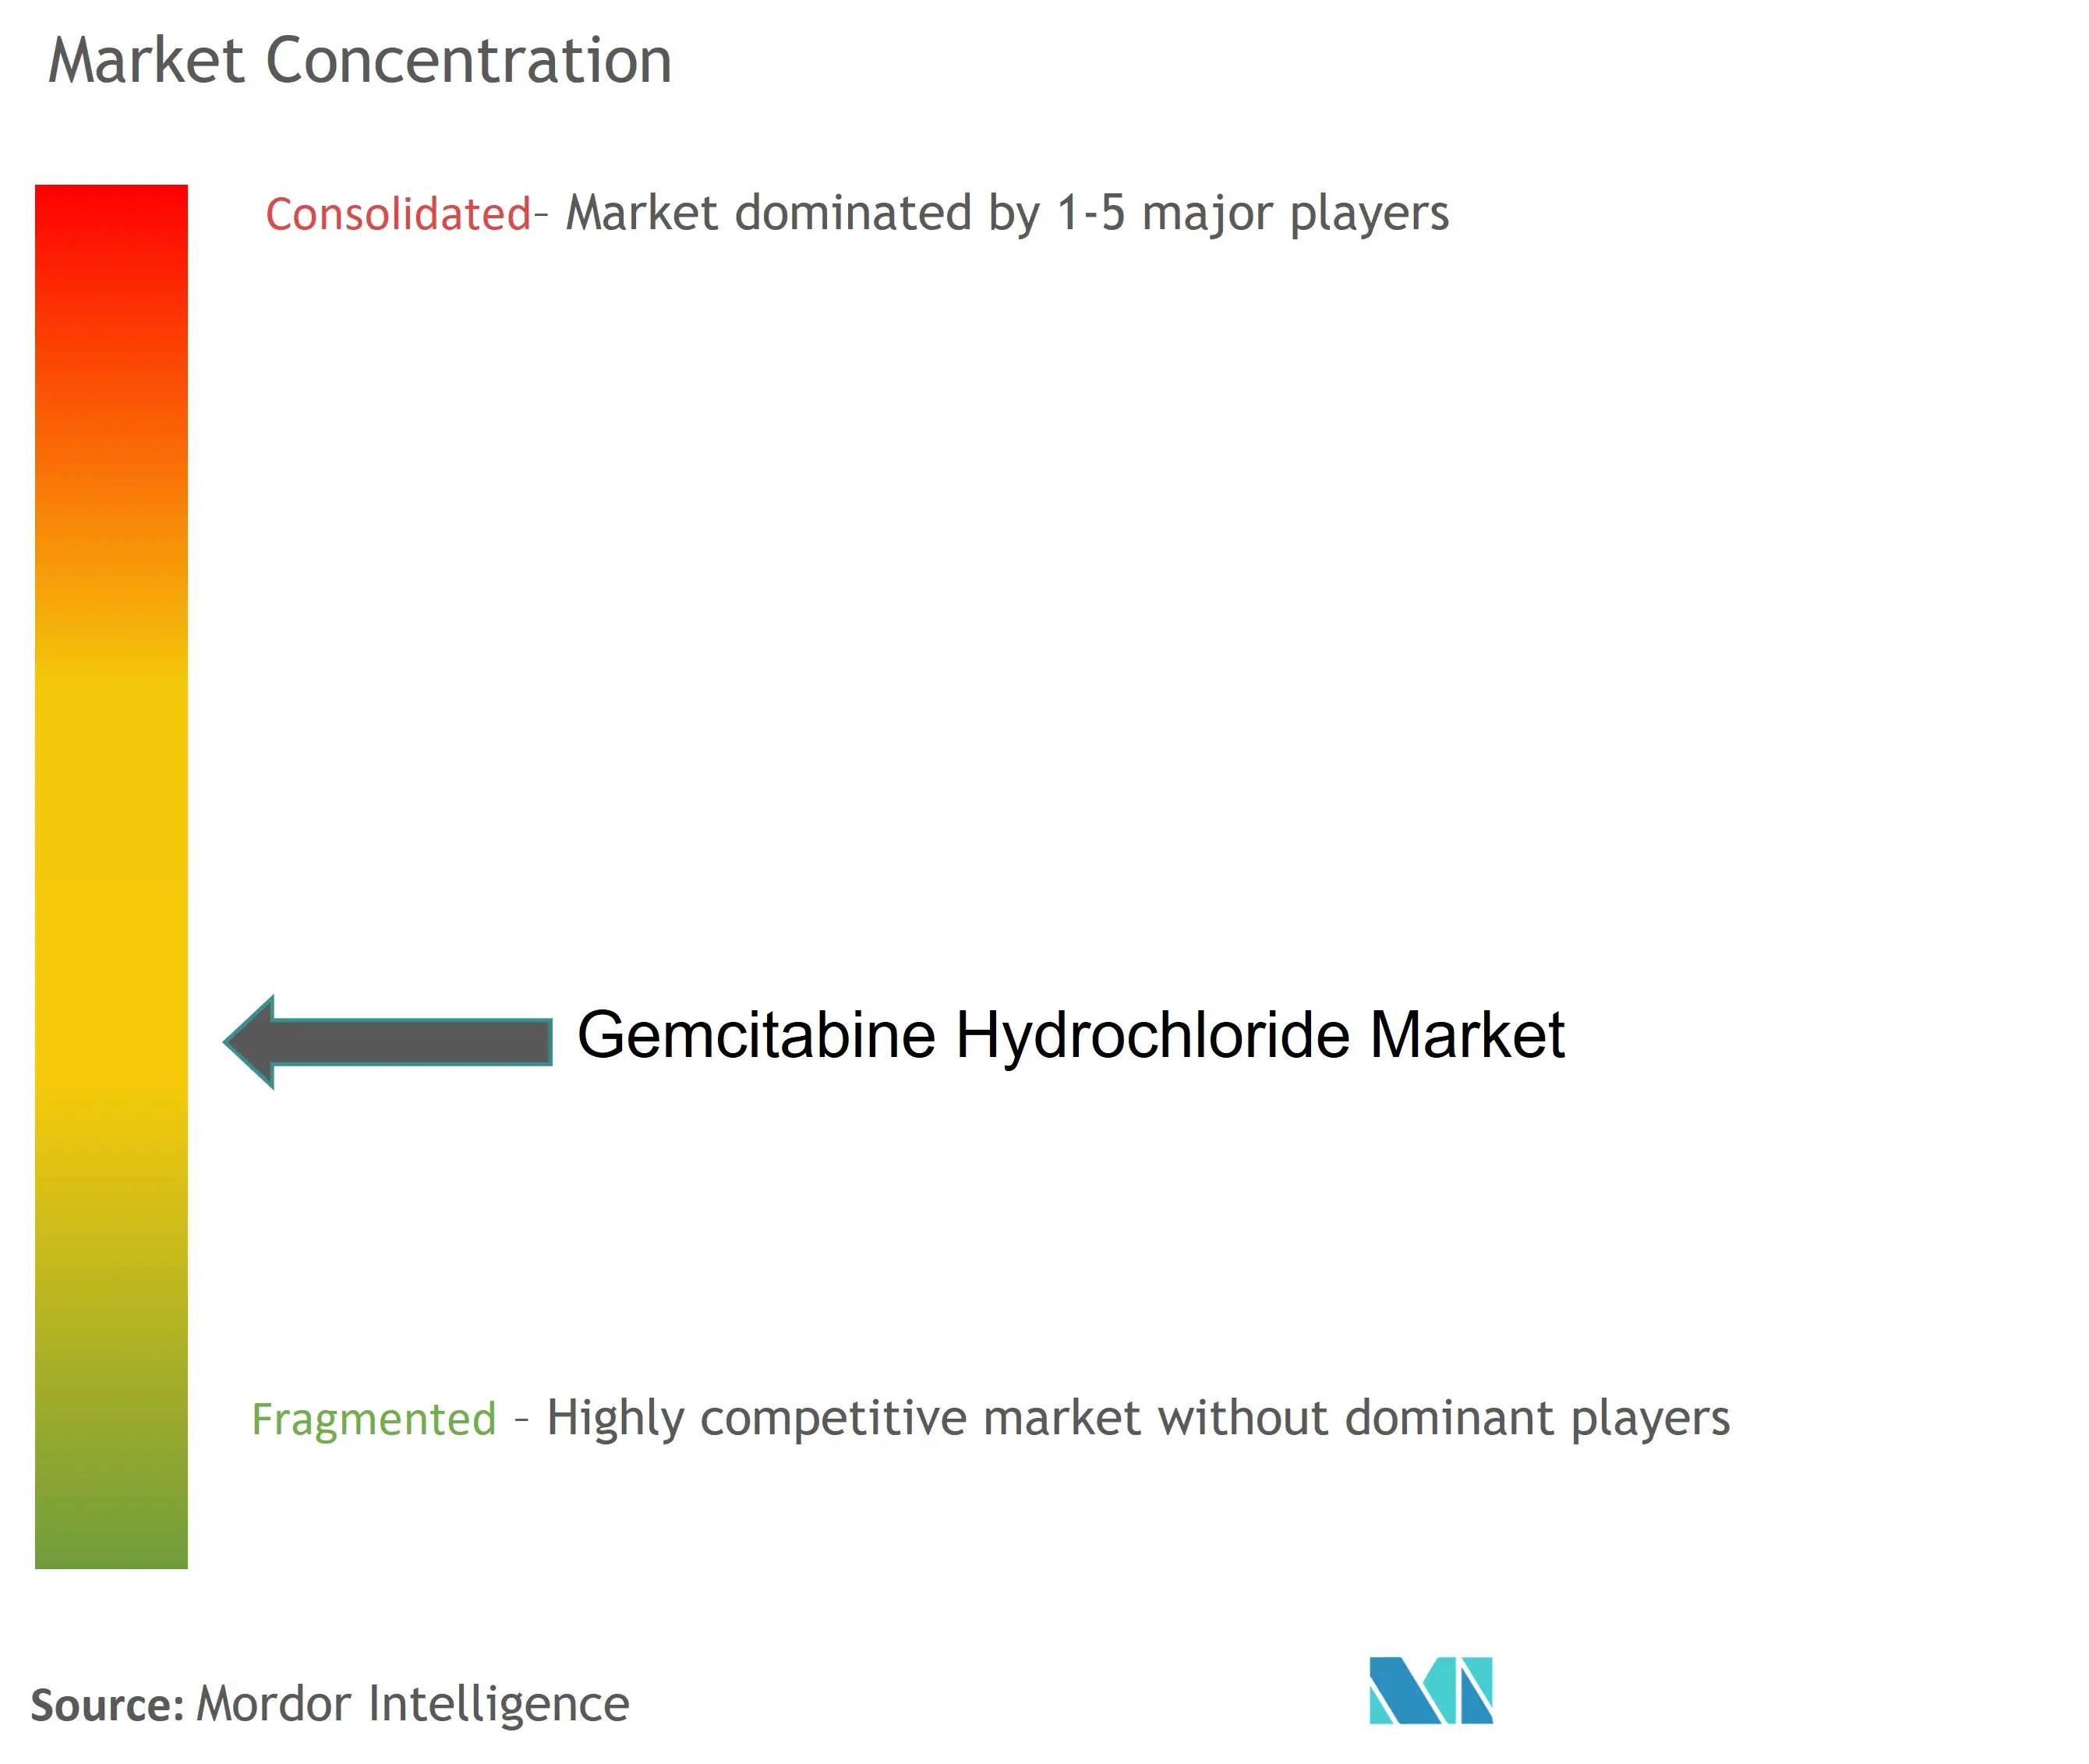 Gemcitabine Hydrochloride Market Concentration